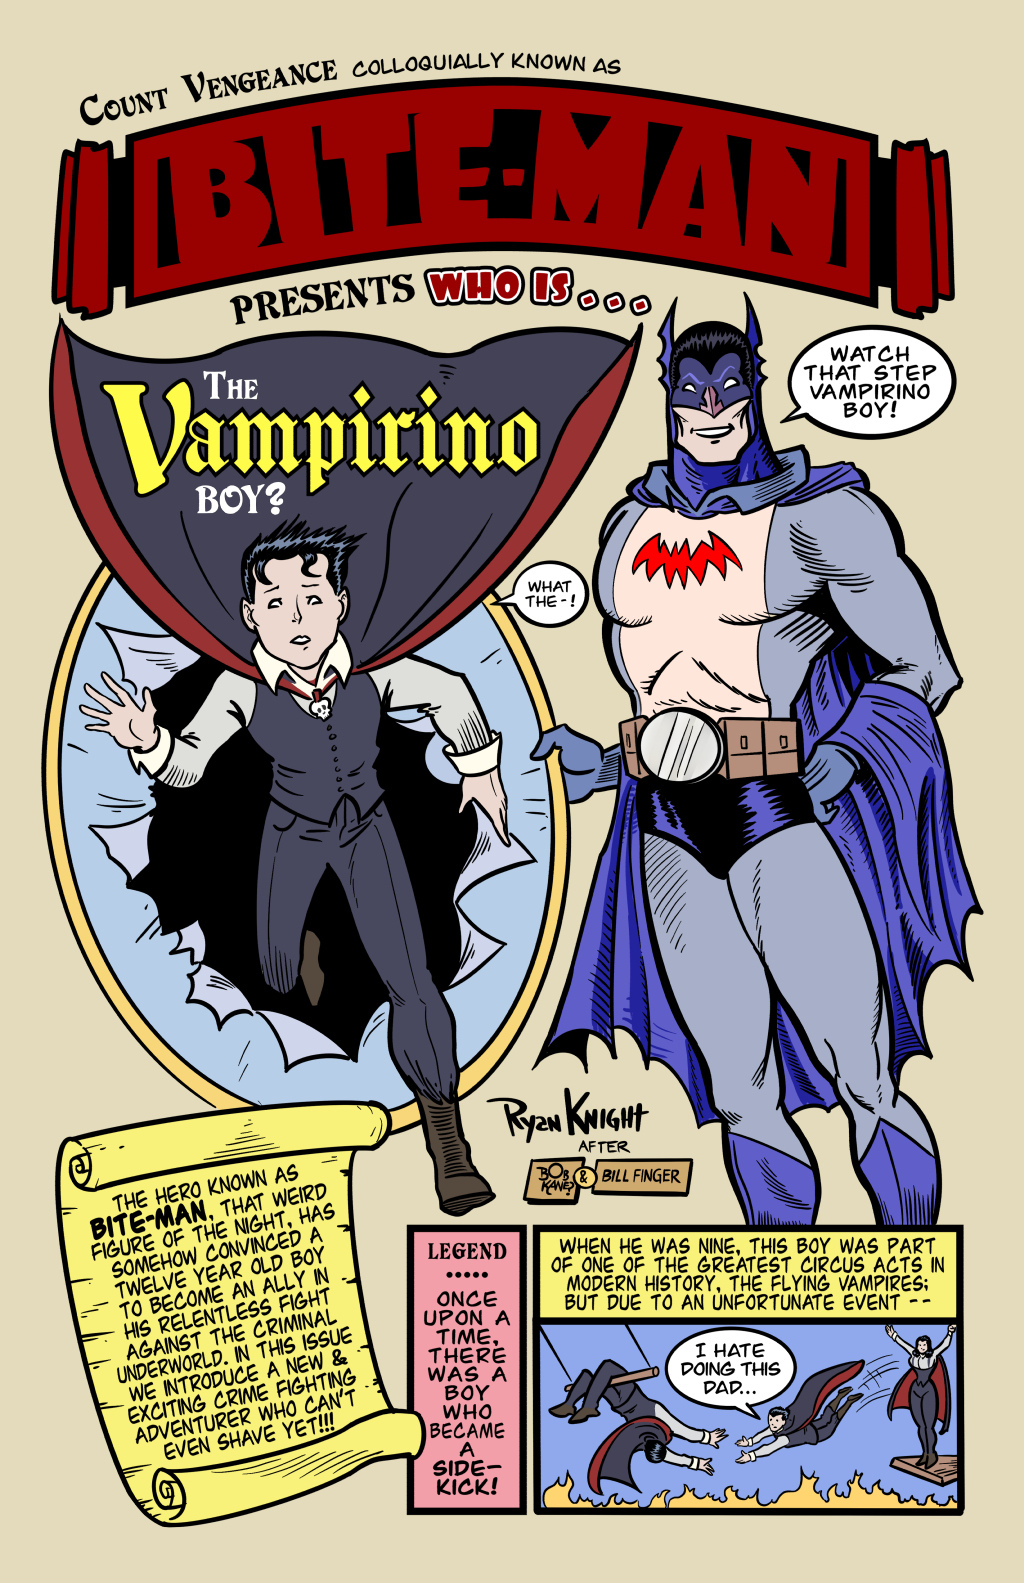 Who is The Vampirino Boy?